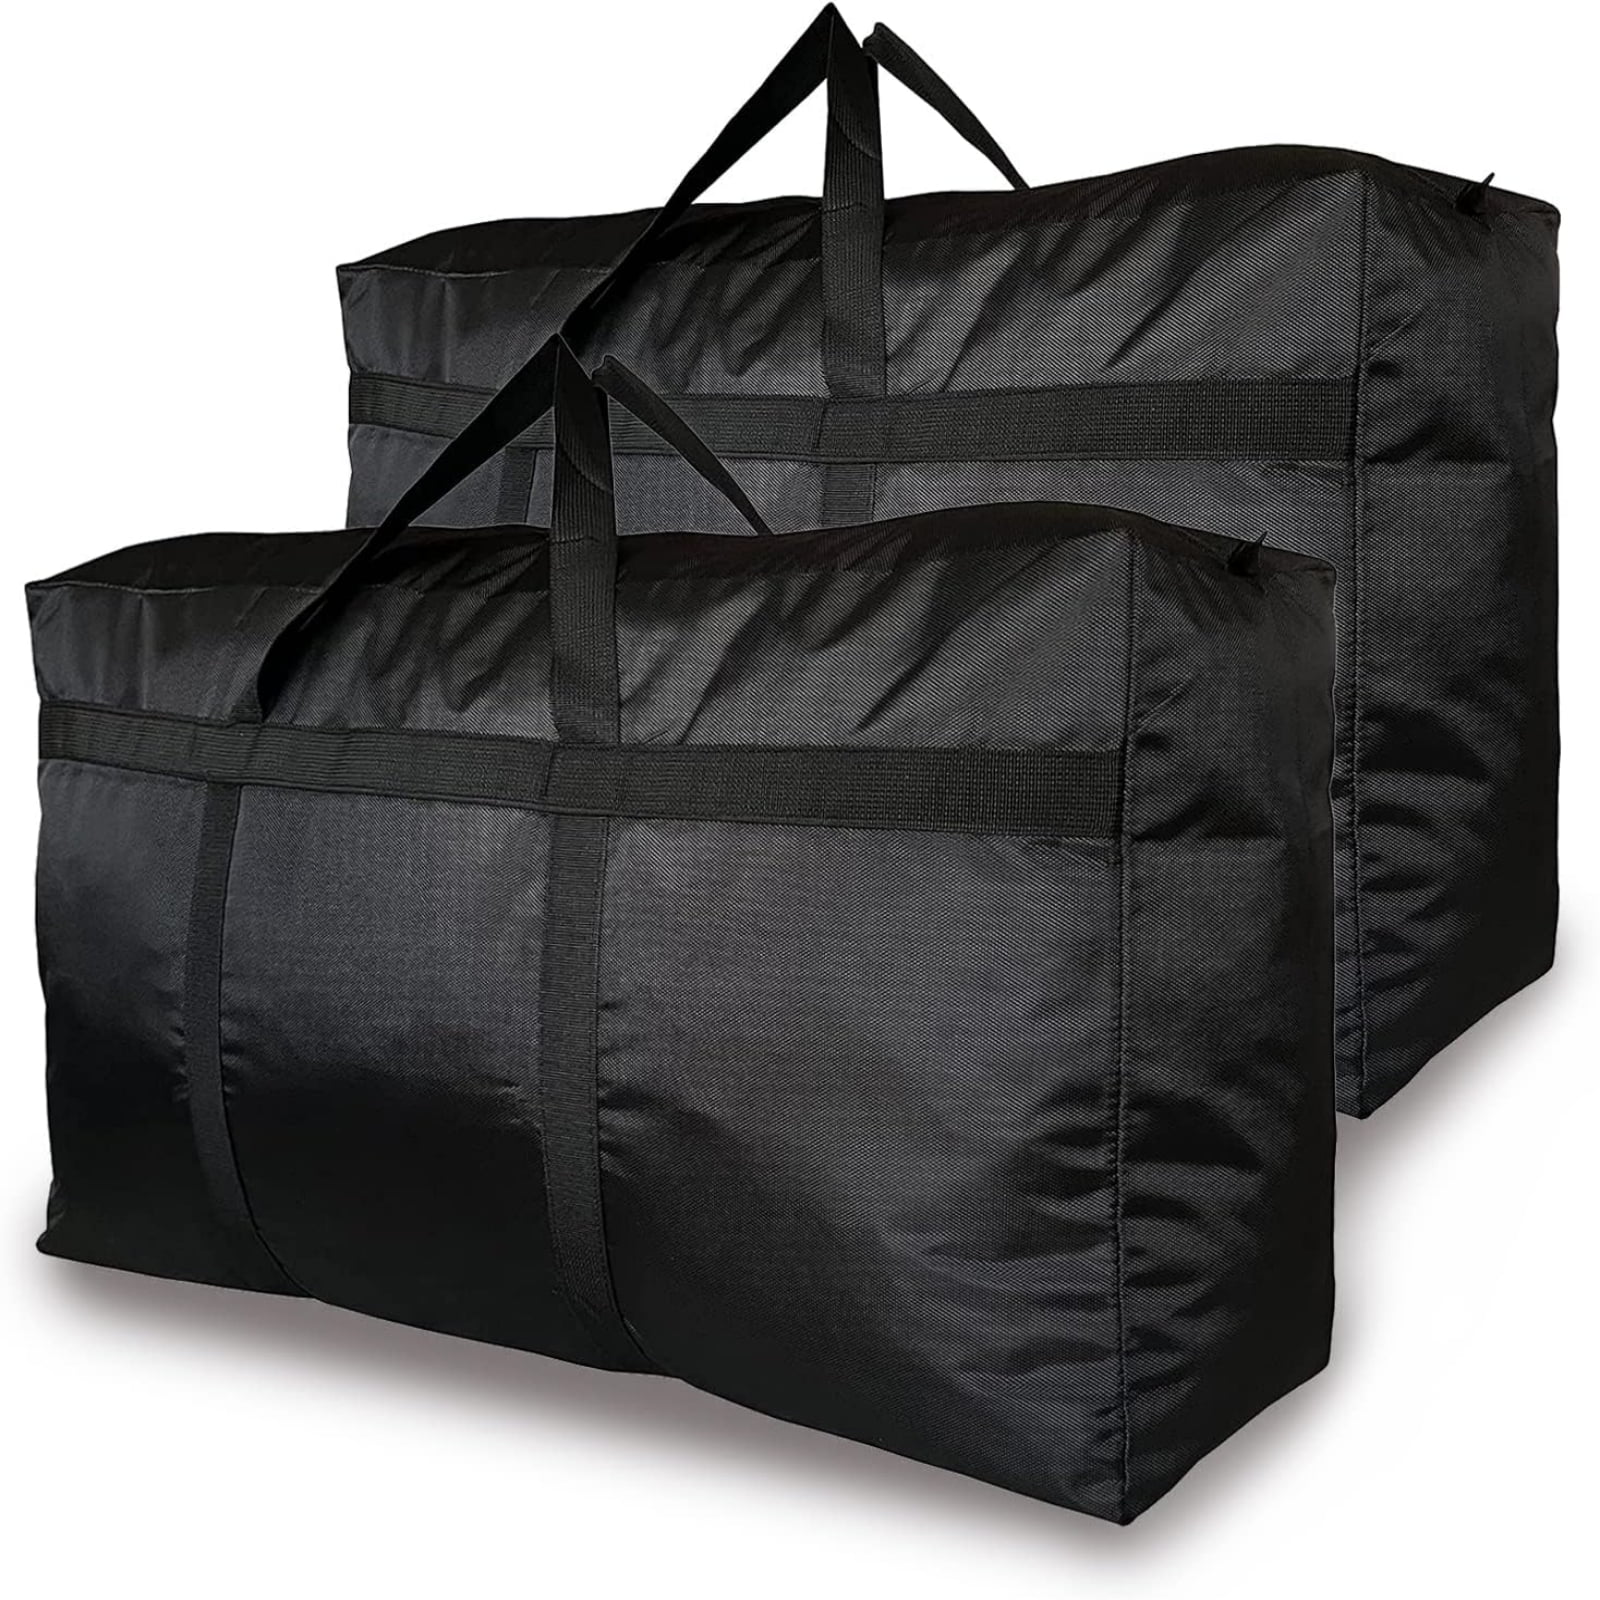 Tripumer 105L Oversized Moving Bag 2PCS Travel Luggage Bag Foldable ...